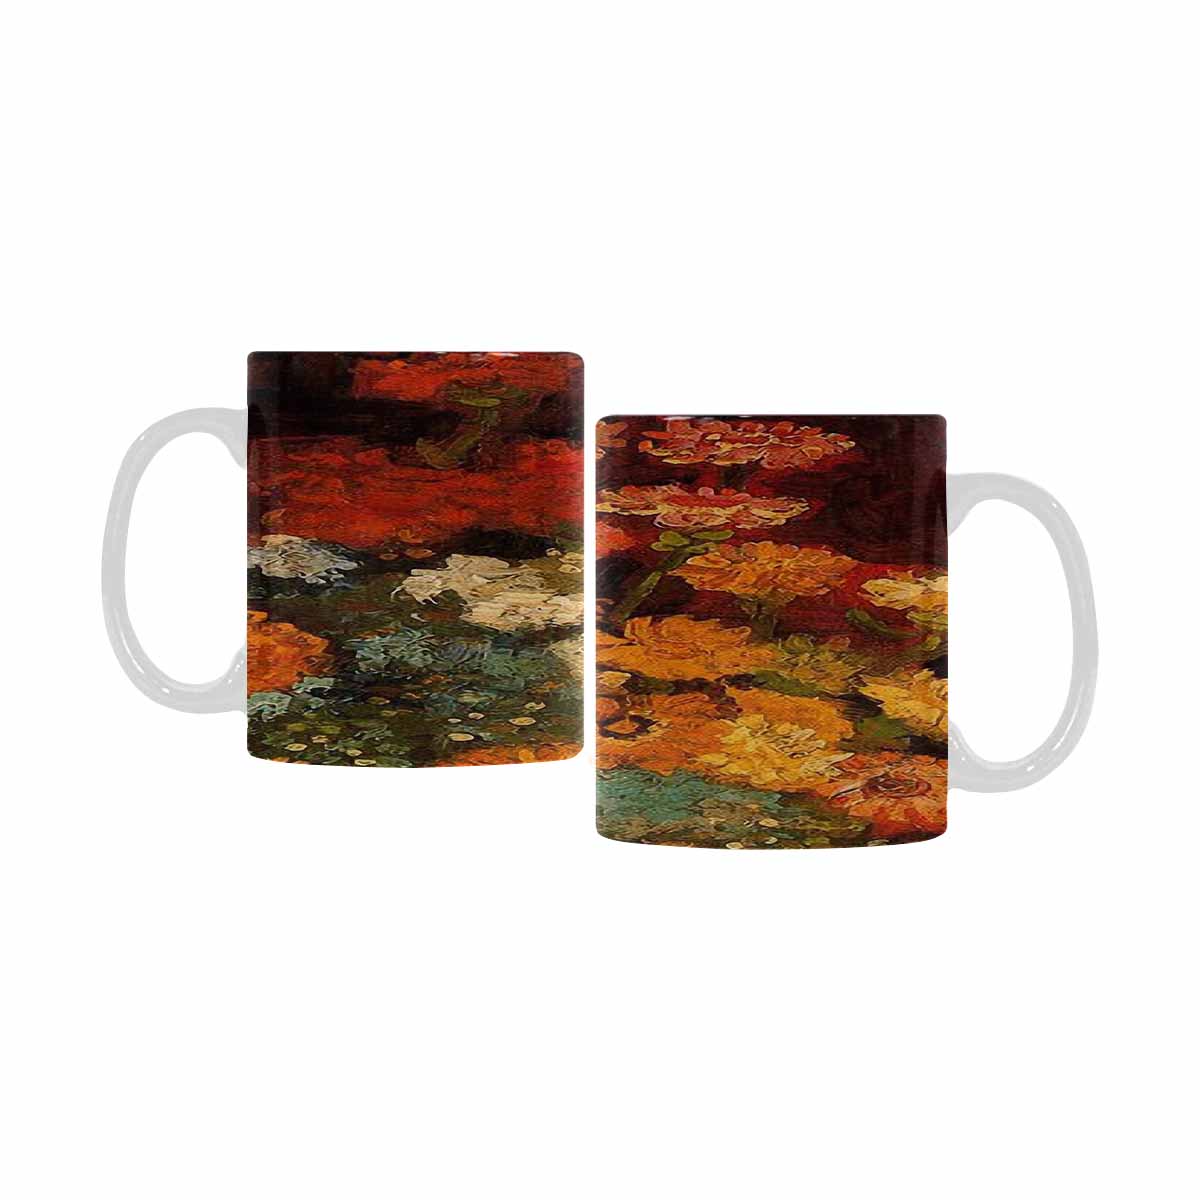 Vintage floral coffee mug or tea cup, Design 31